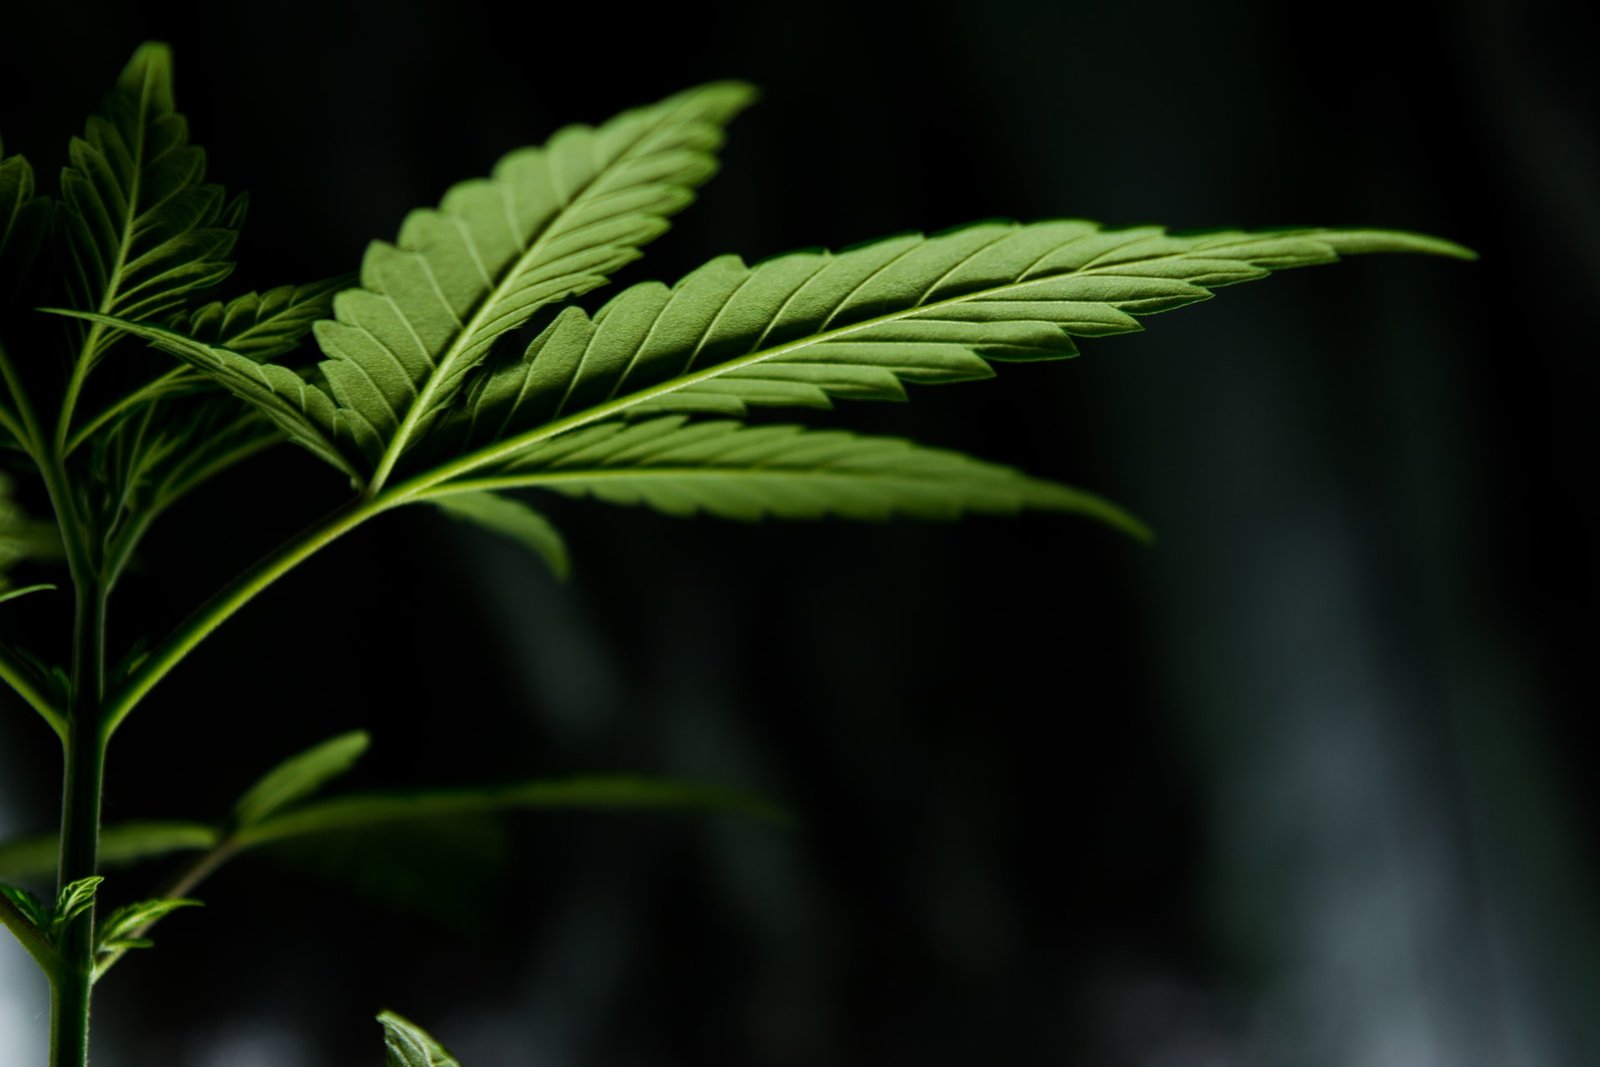 light shining on cannabis leaf against black backdrop